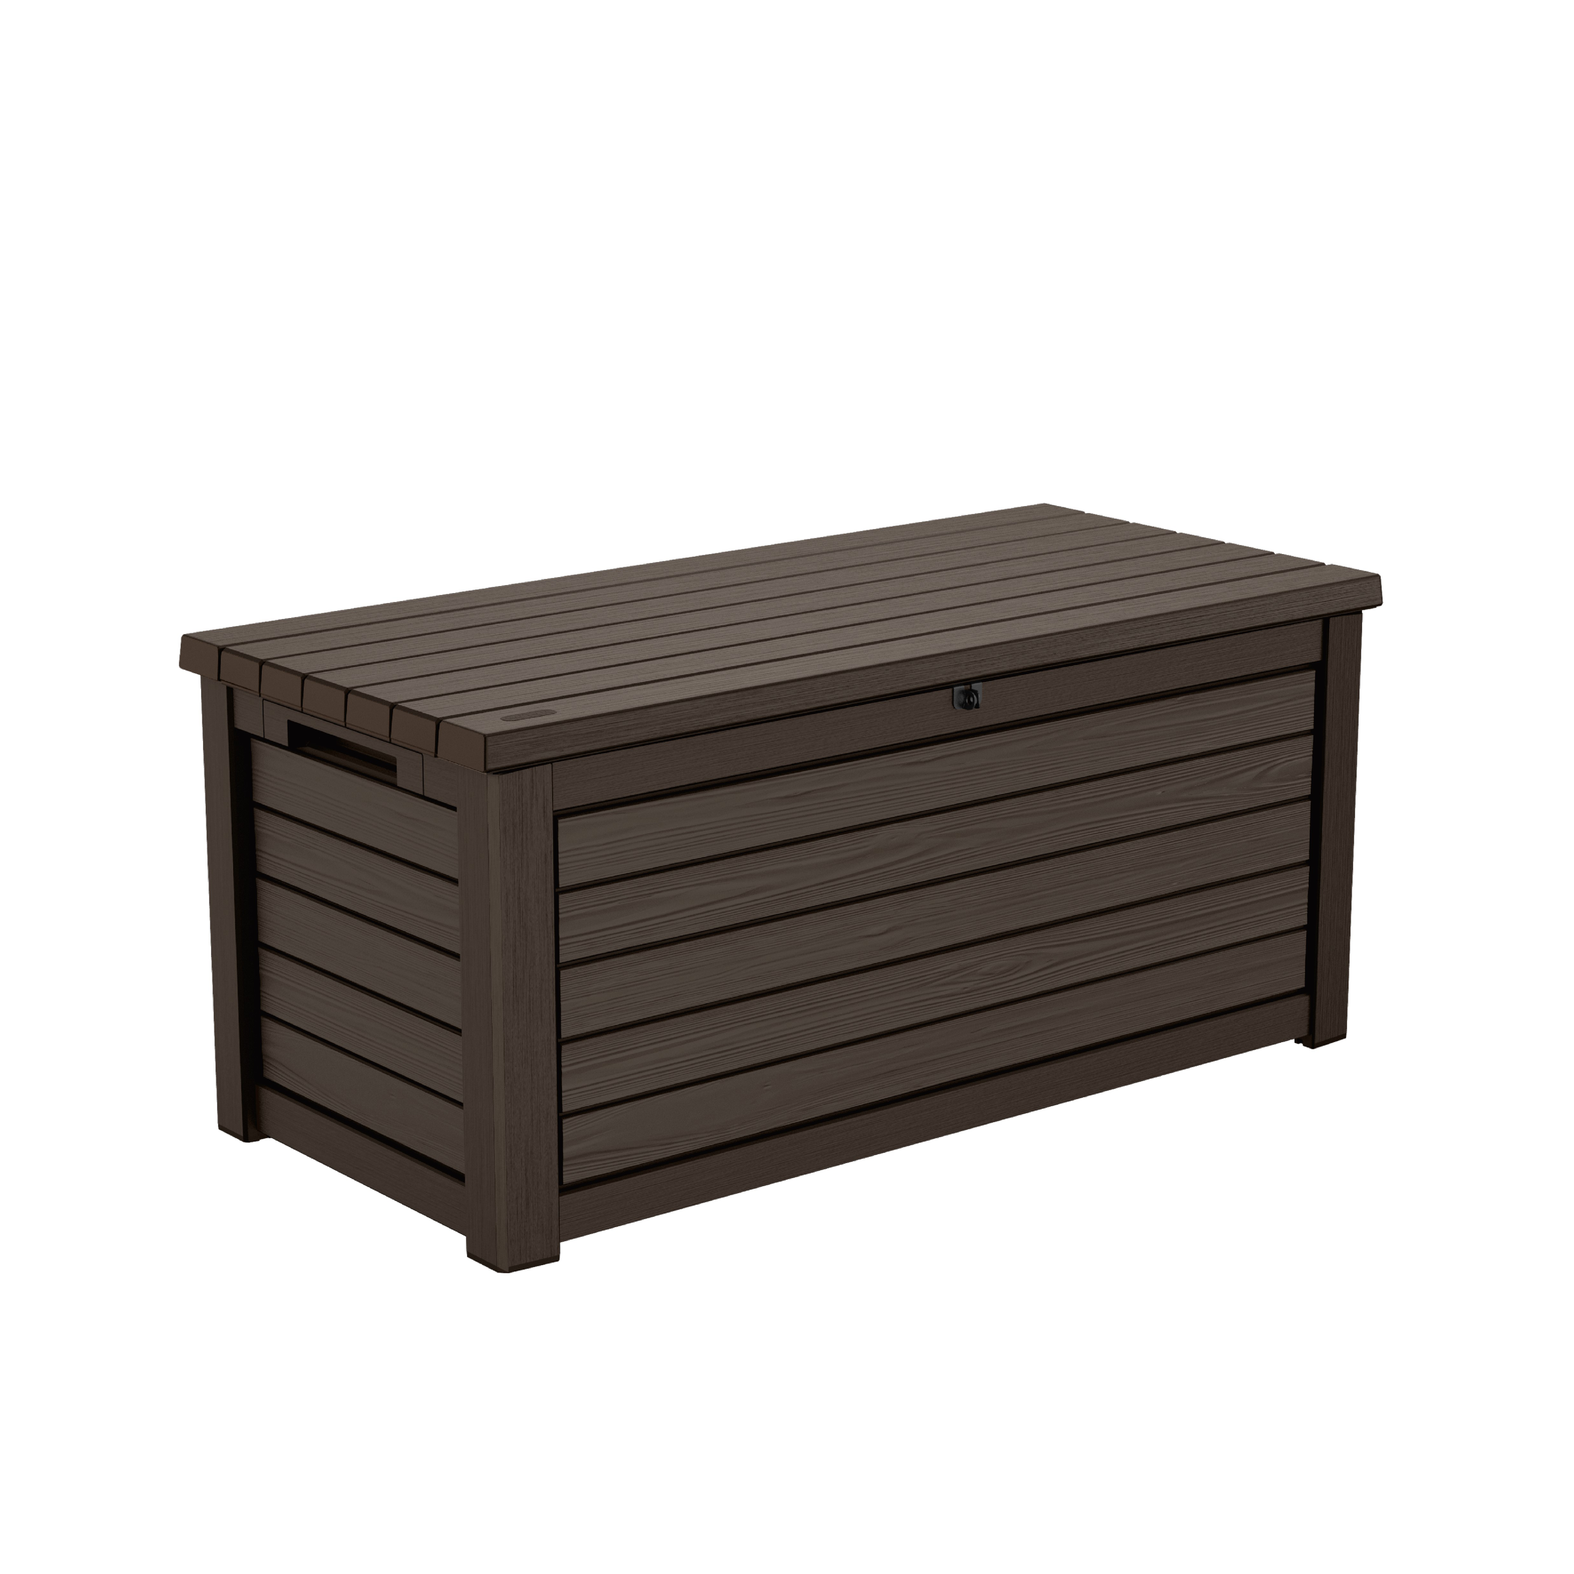 Keter Hingham Storage Box in Dark Brown Outdoor Storage Keter Default Title  